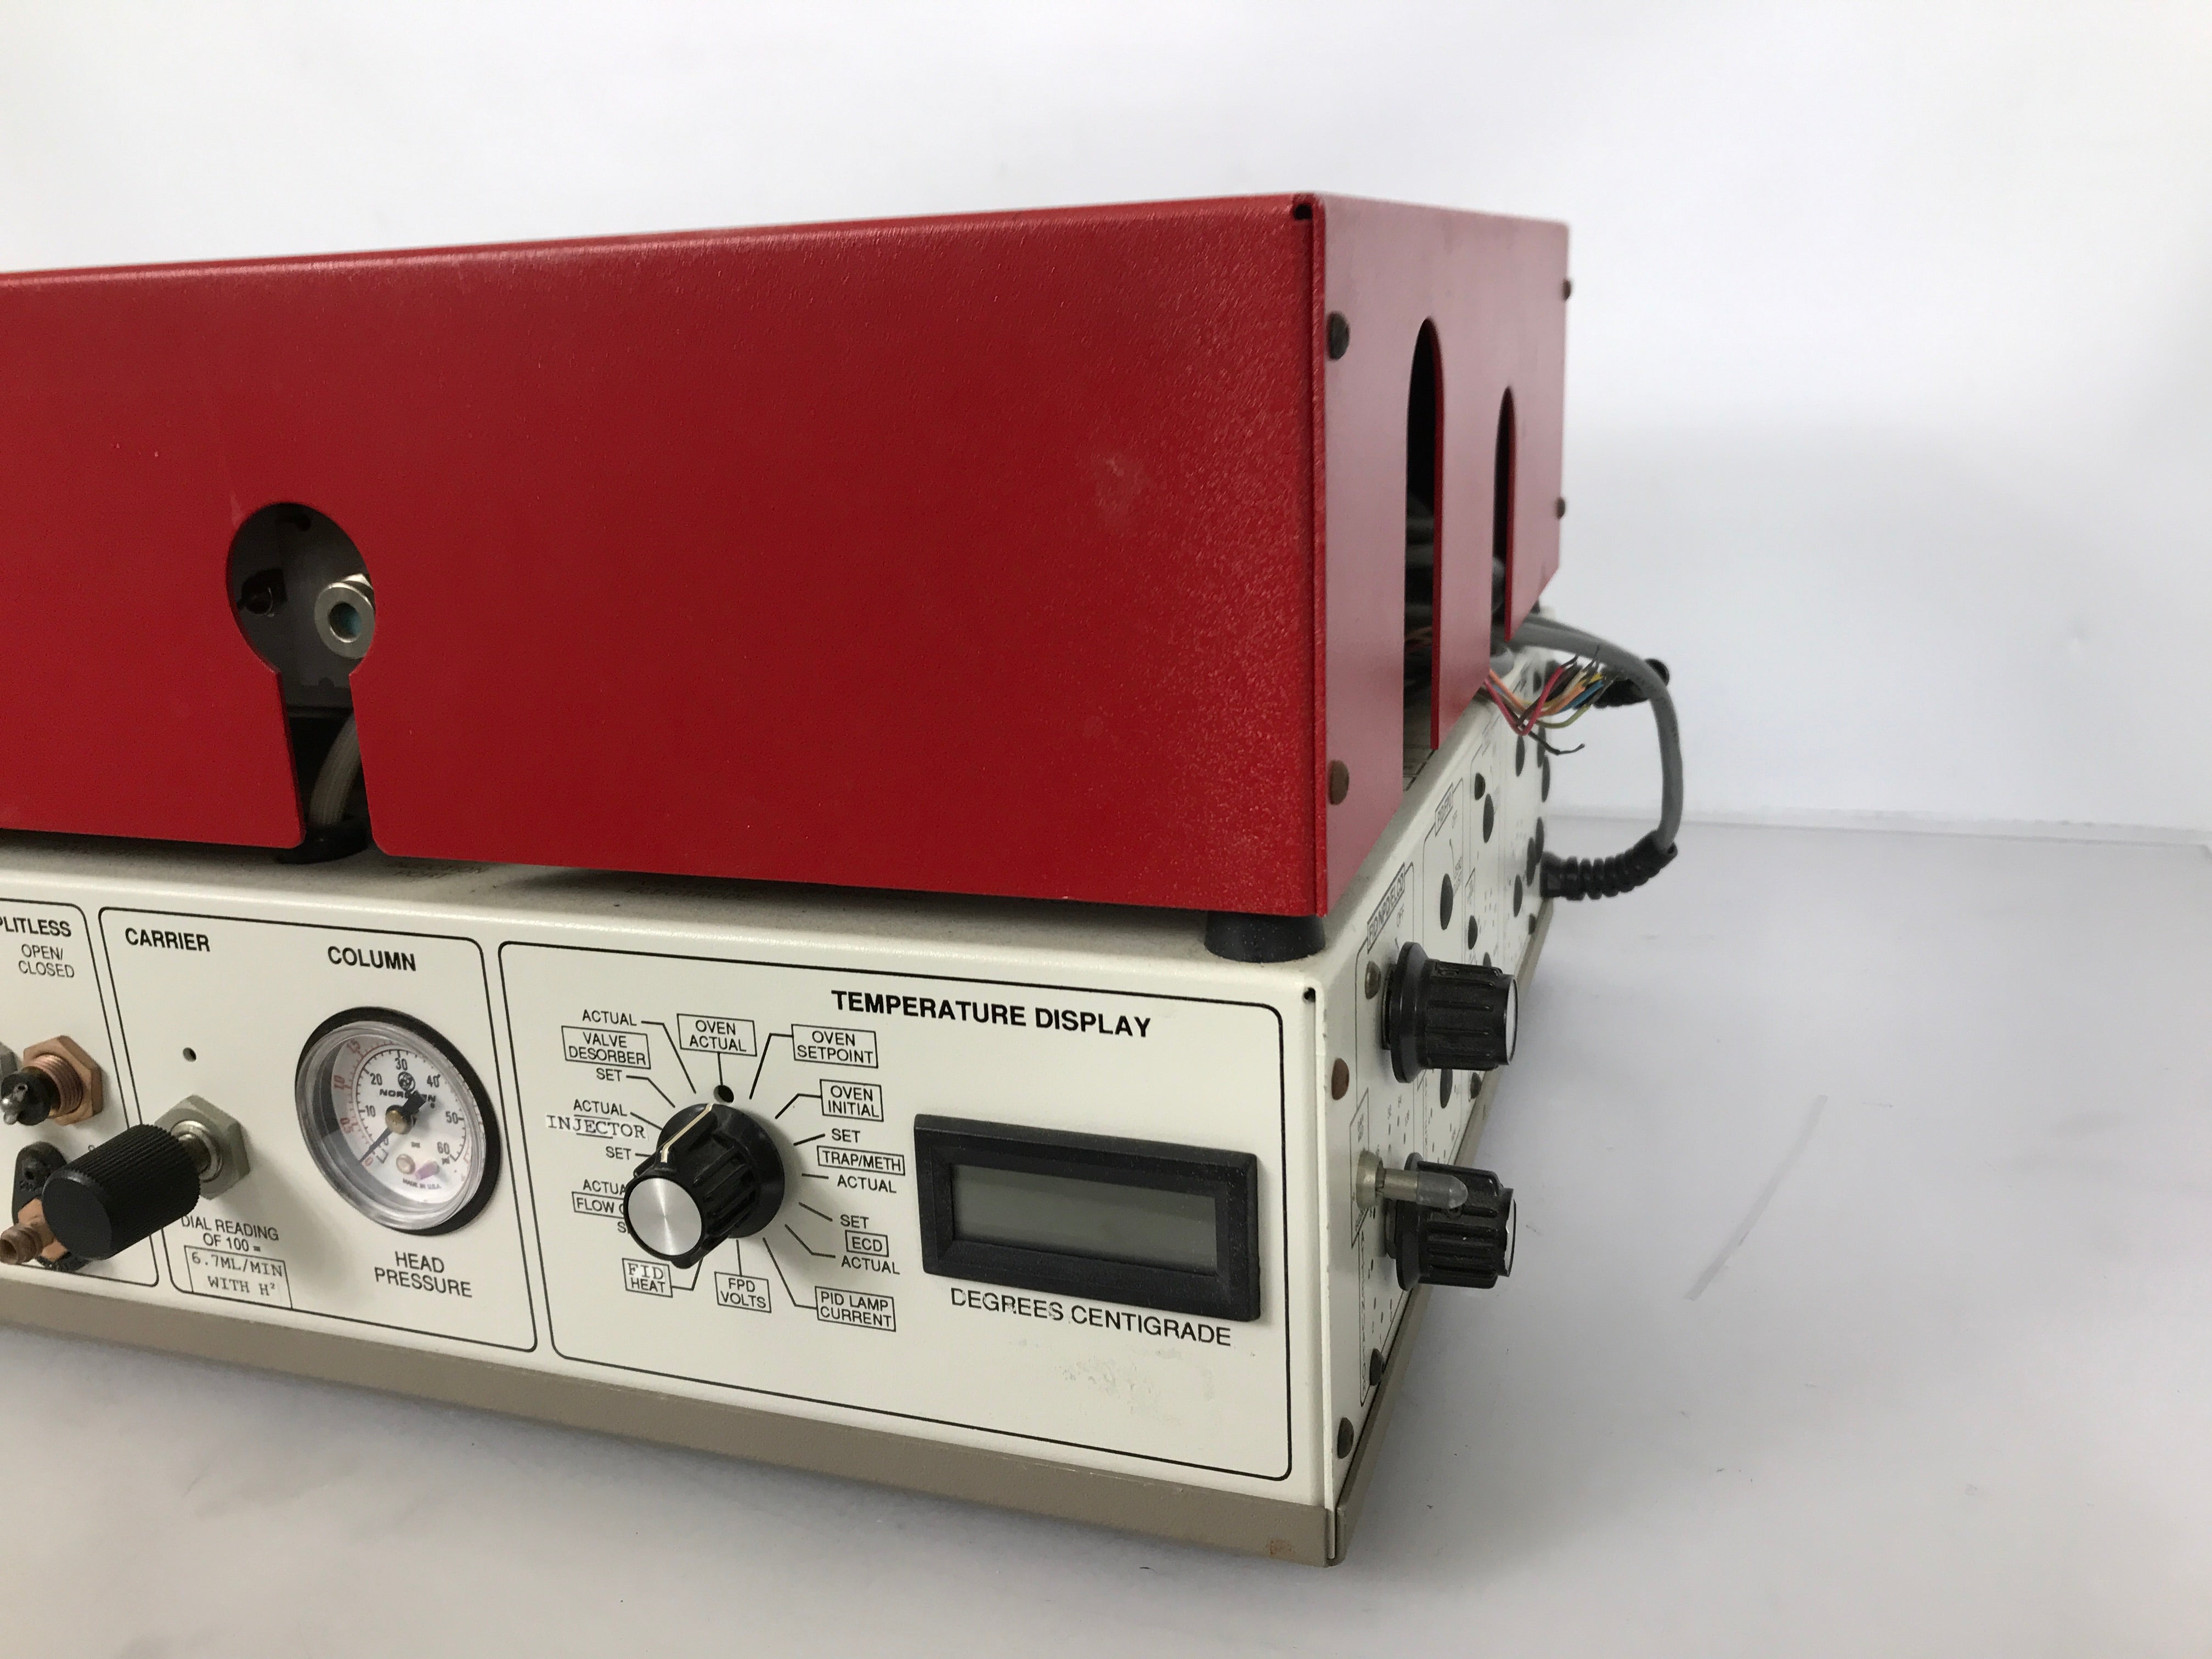 SRI Gas Chromatograph Model 8610 *For Parts or Repair*